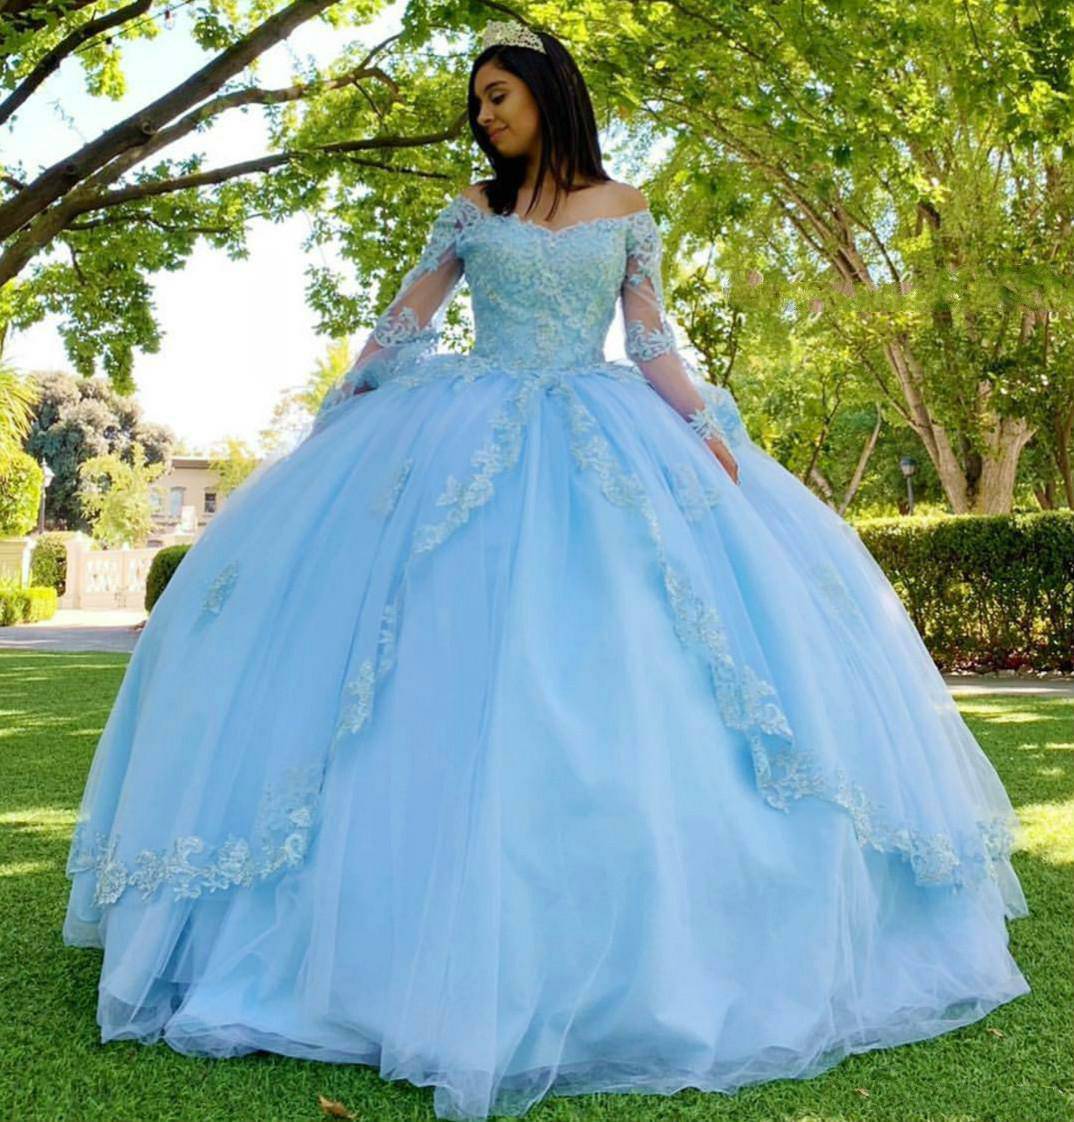 A dress fit for a princess by The-Blue-EM2 on DeviantArt